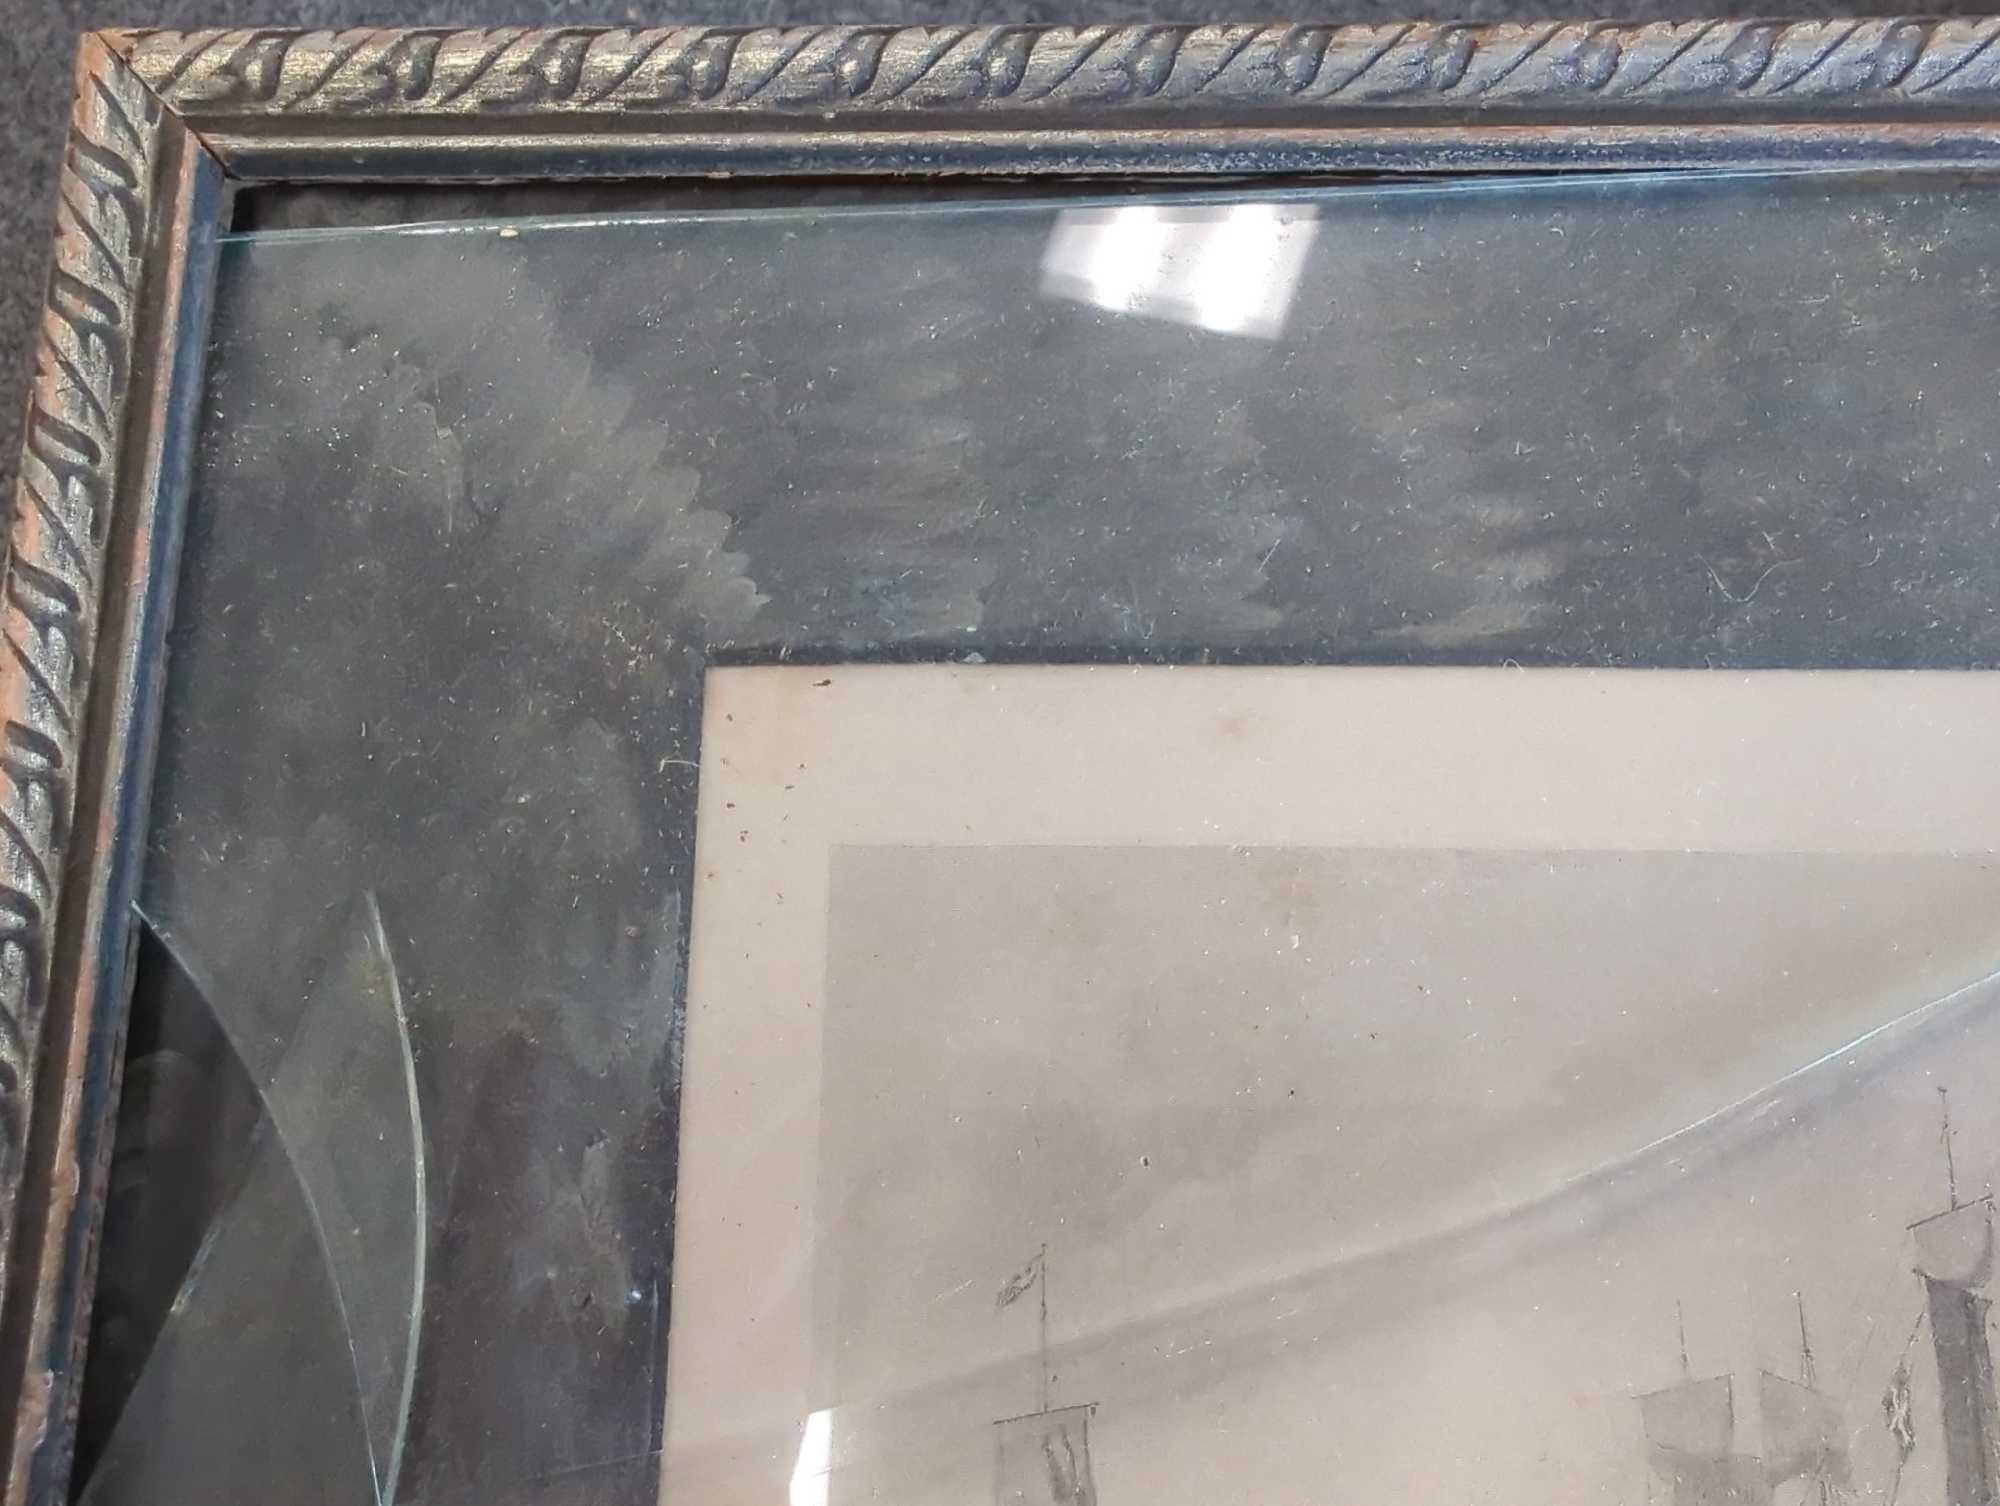 Framed Print Of "The Battle of Trafalgar" By J. Cousen, Engraver, Glass in Frame is Broken Needs to